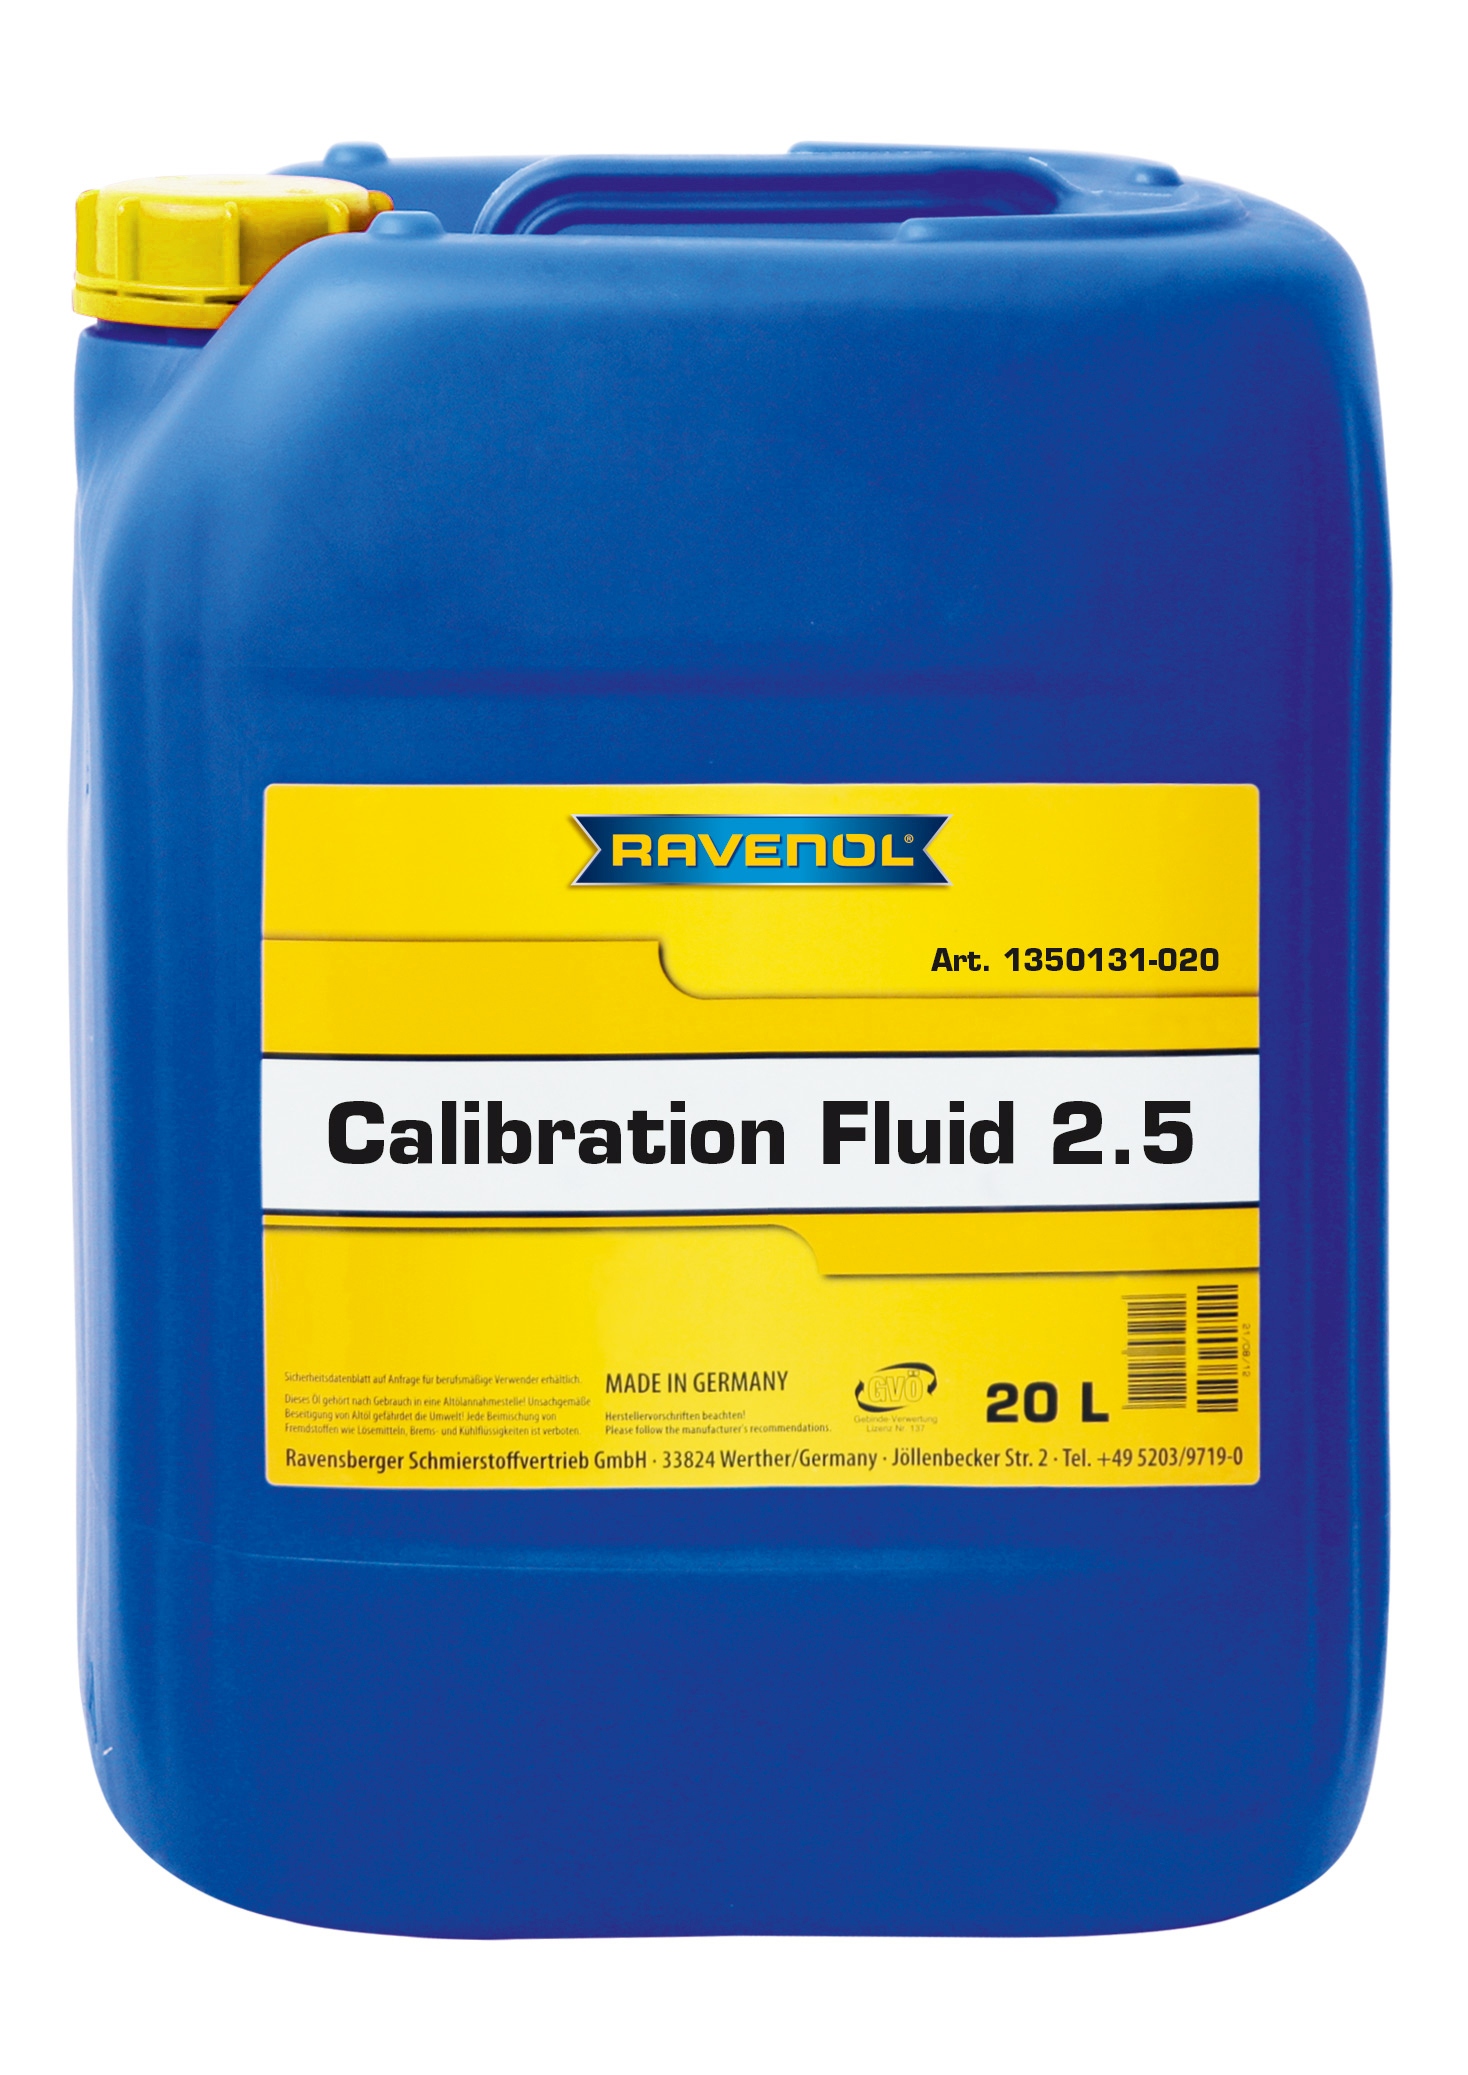 * RAVENOL Calibration Fluid 2.5